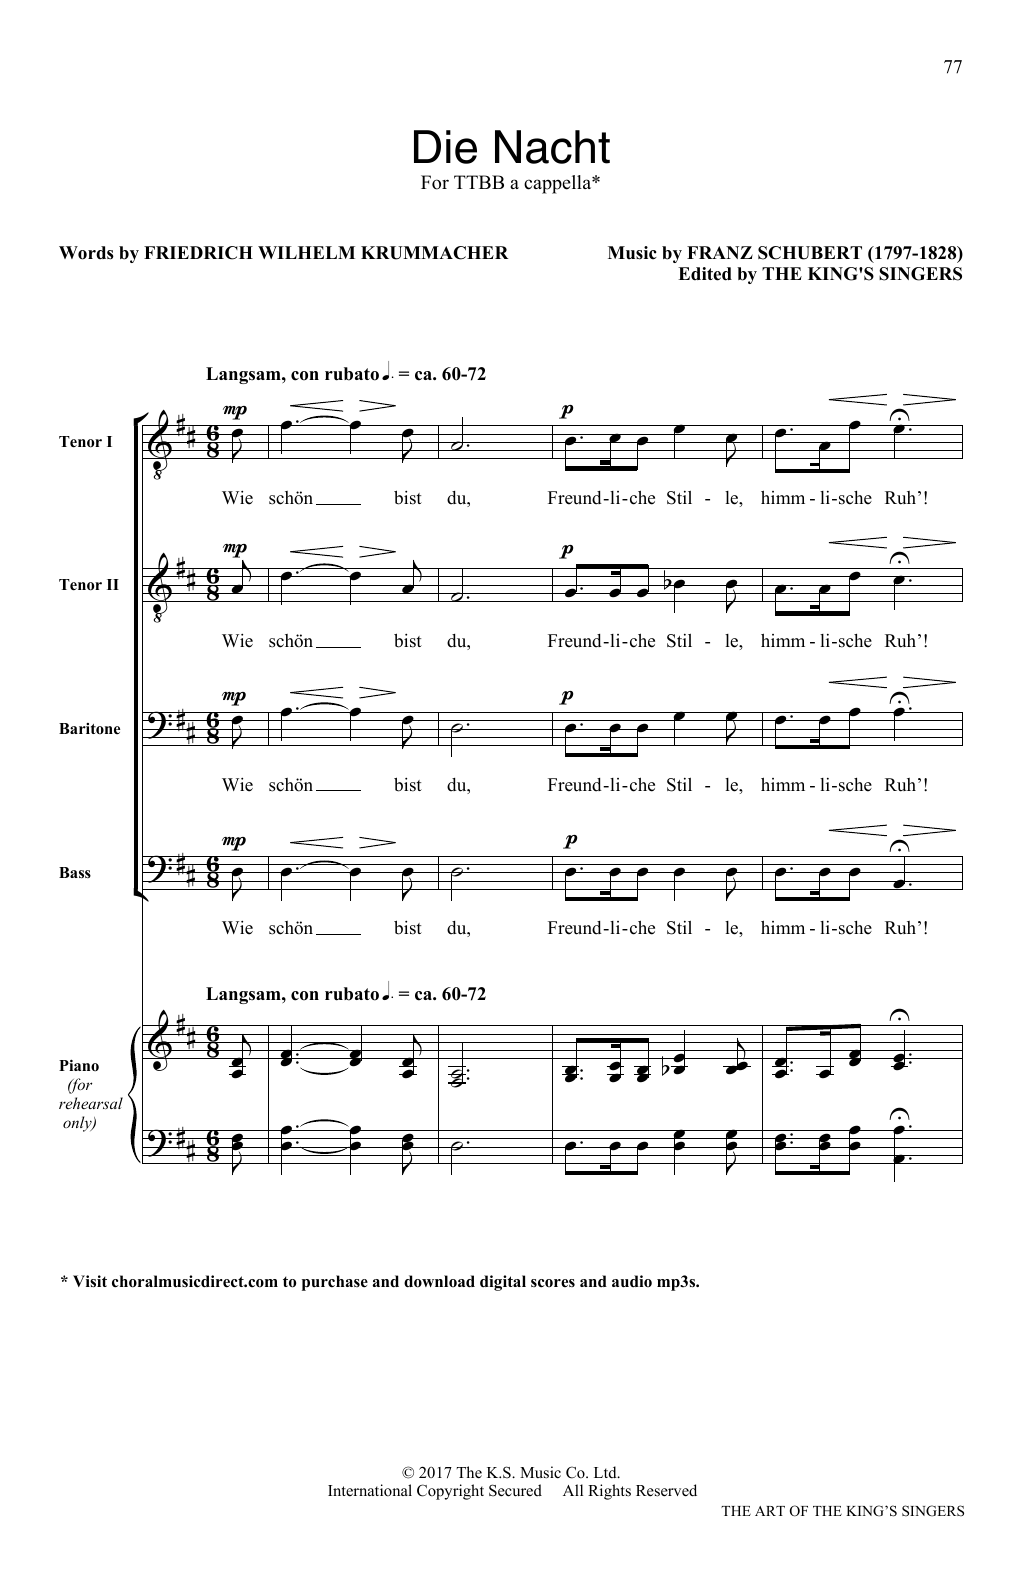 Franz Schubert Die Nacht Sheet Music Notes & Chords for SATB - Download or Print PDF